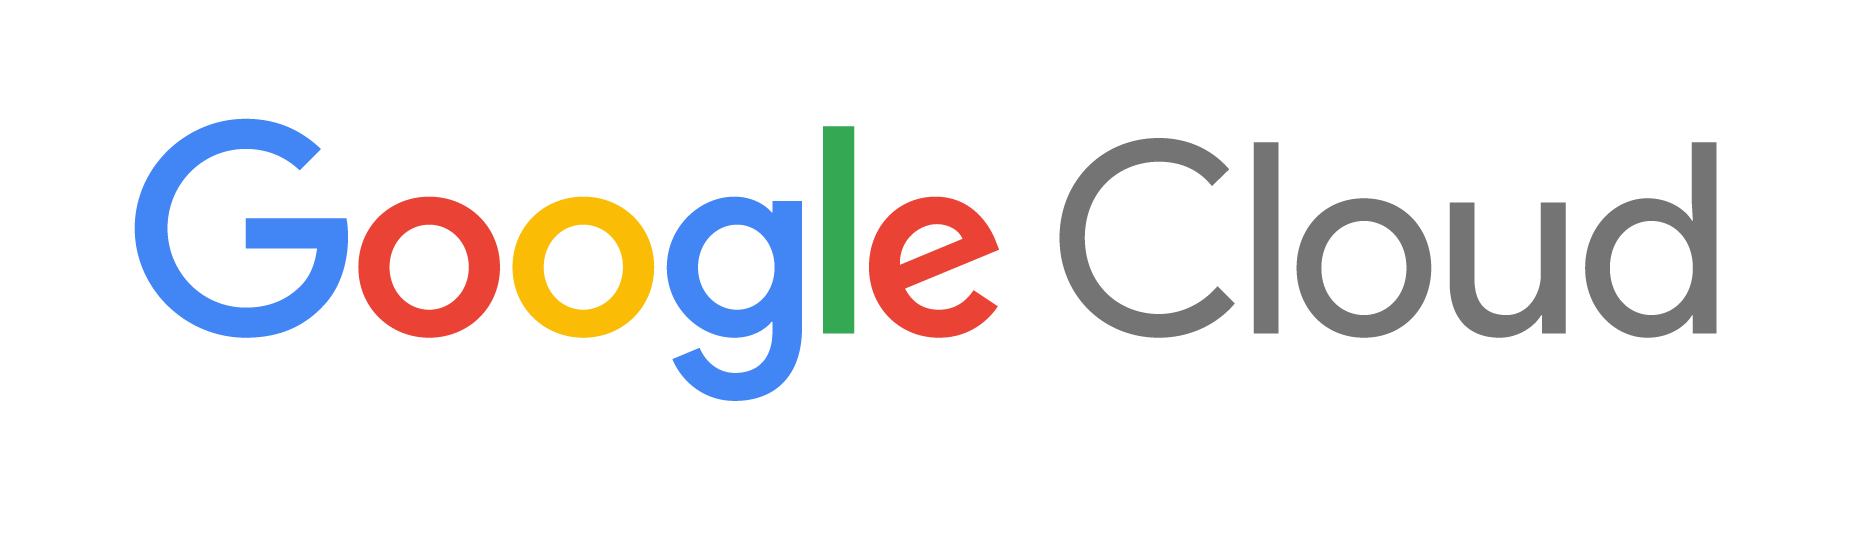 Google Cloud Logo PNG Image  PurePNG  Free transparent